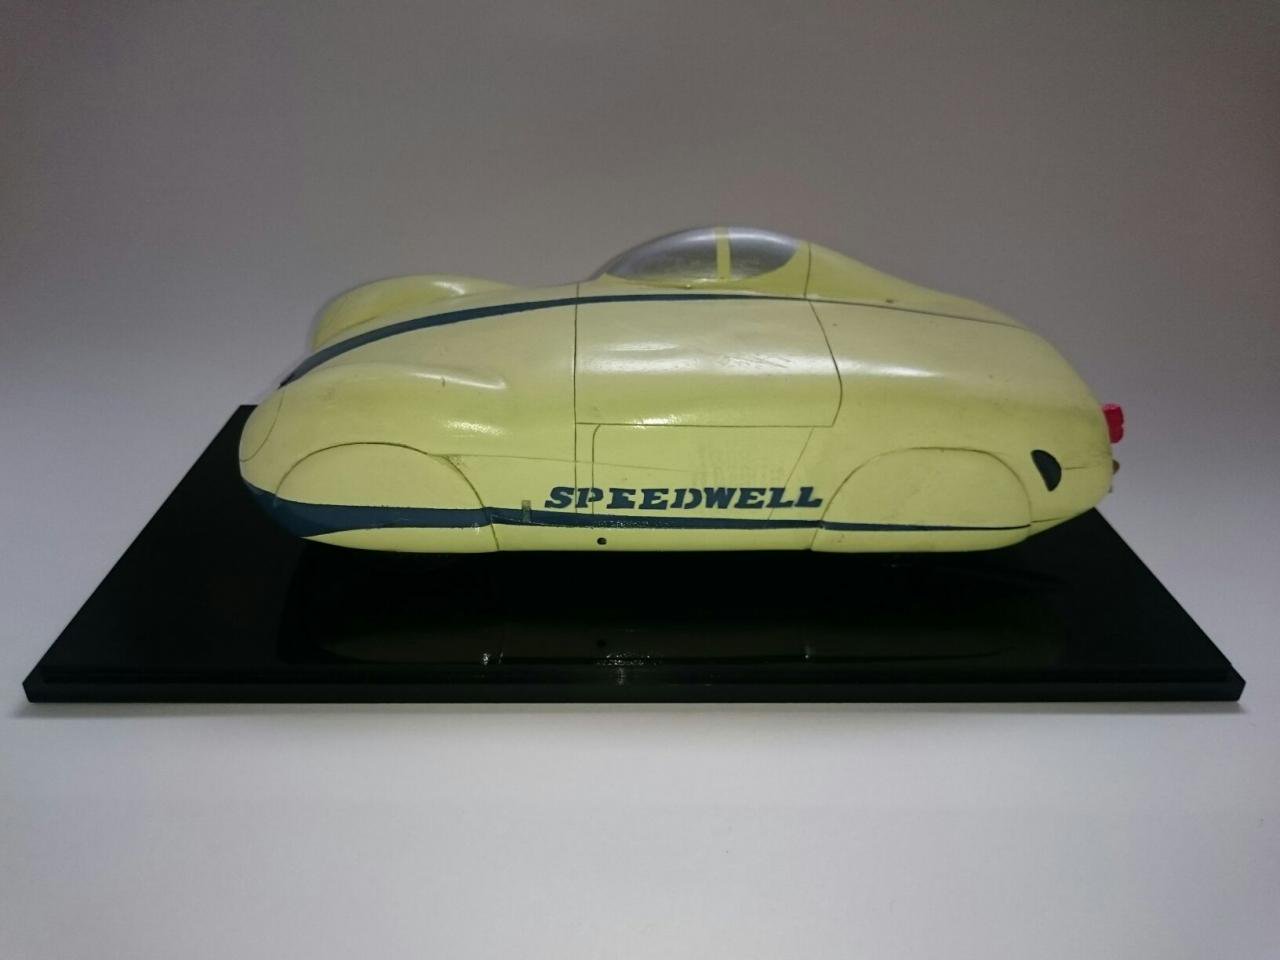 SPEEDWELL - ハンドメイド木製モデルカー